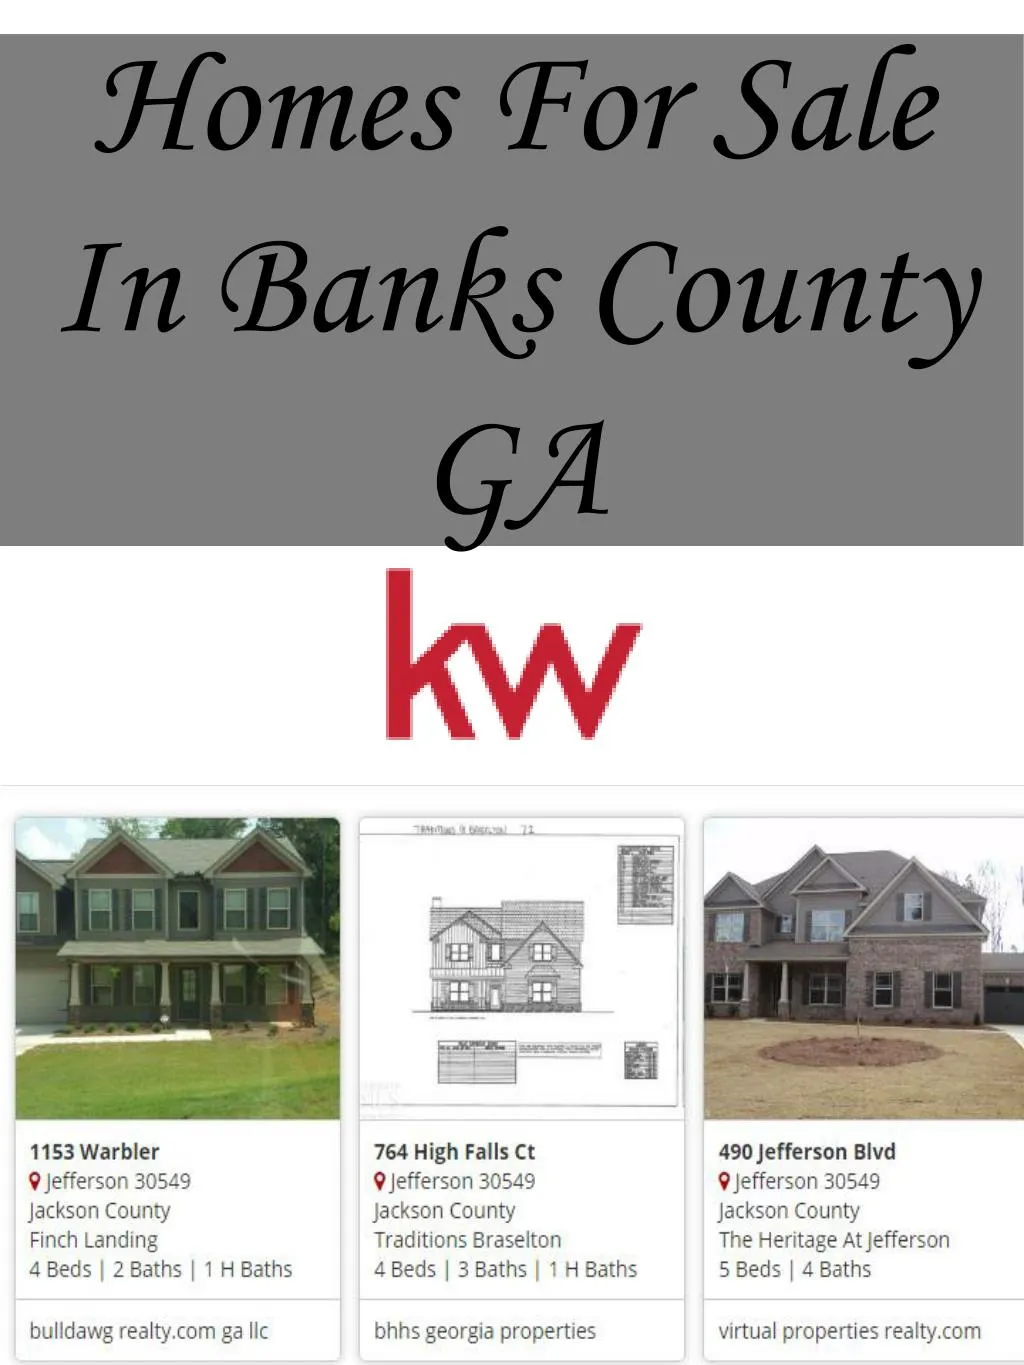 bad and busted banks county ga 2019